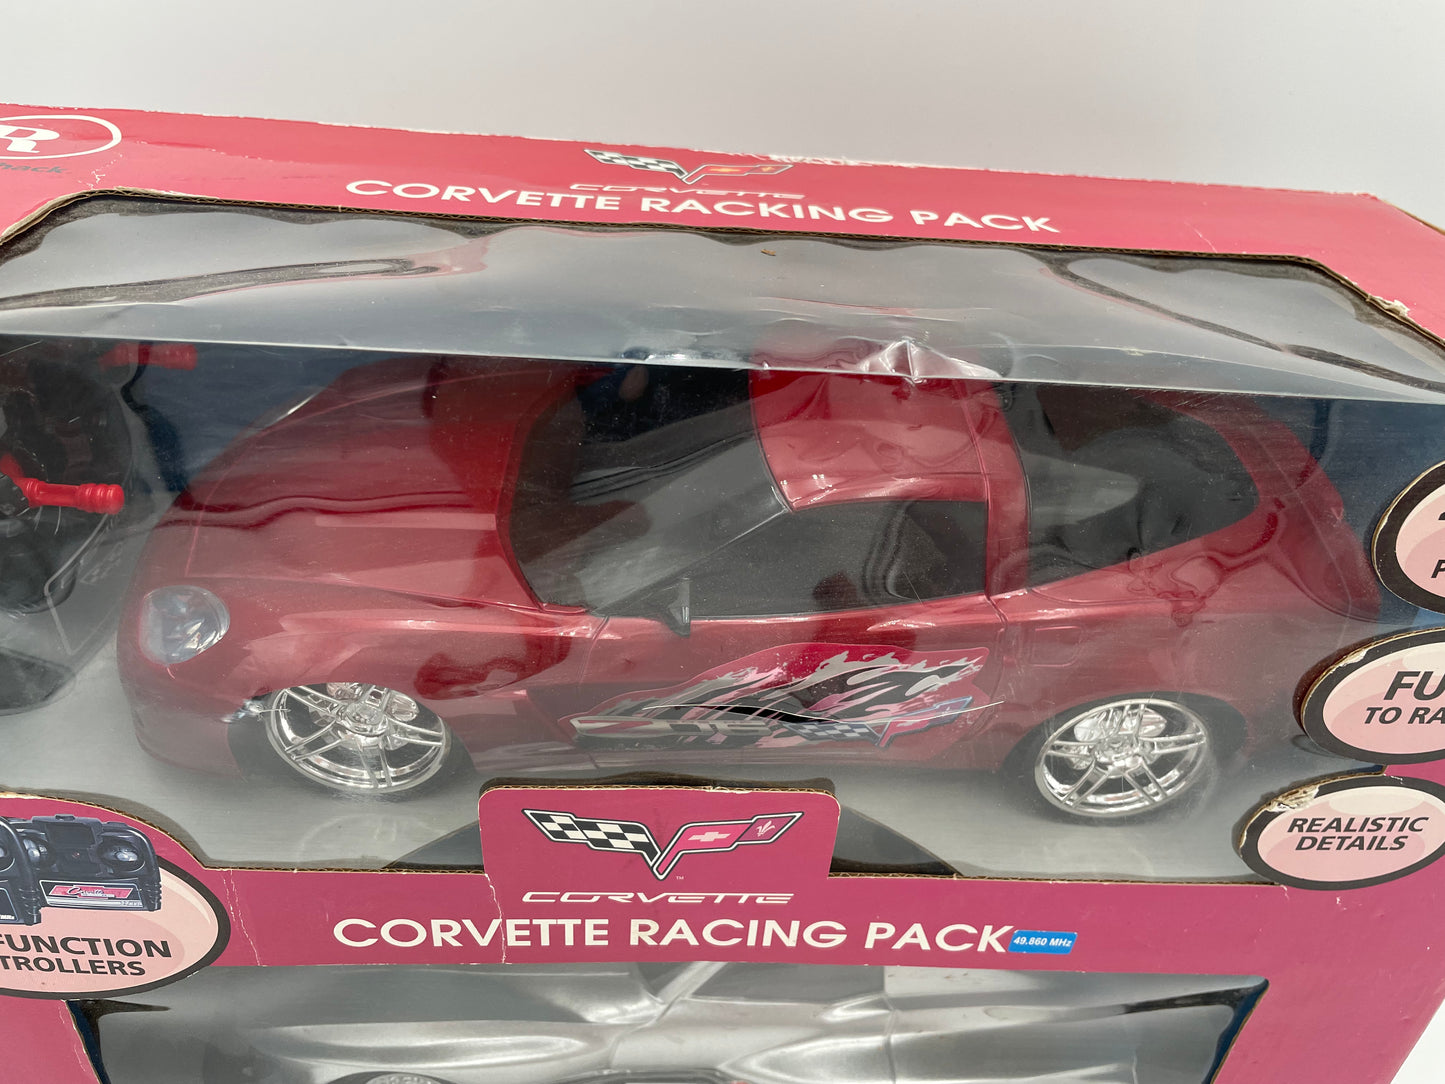 Radio Shack - Corvette Racing Pack - 1:15 Scale - 1990s? #102706